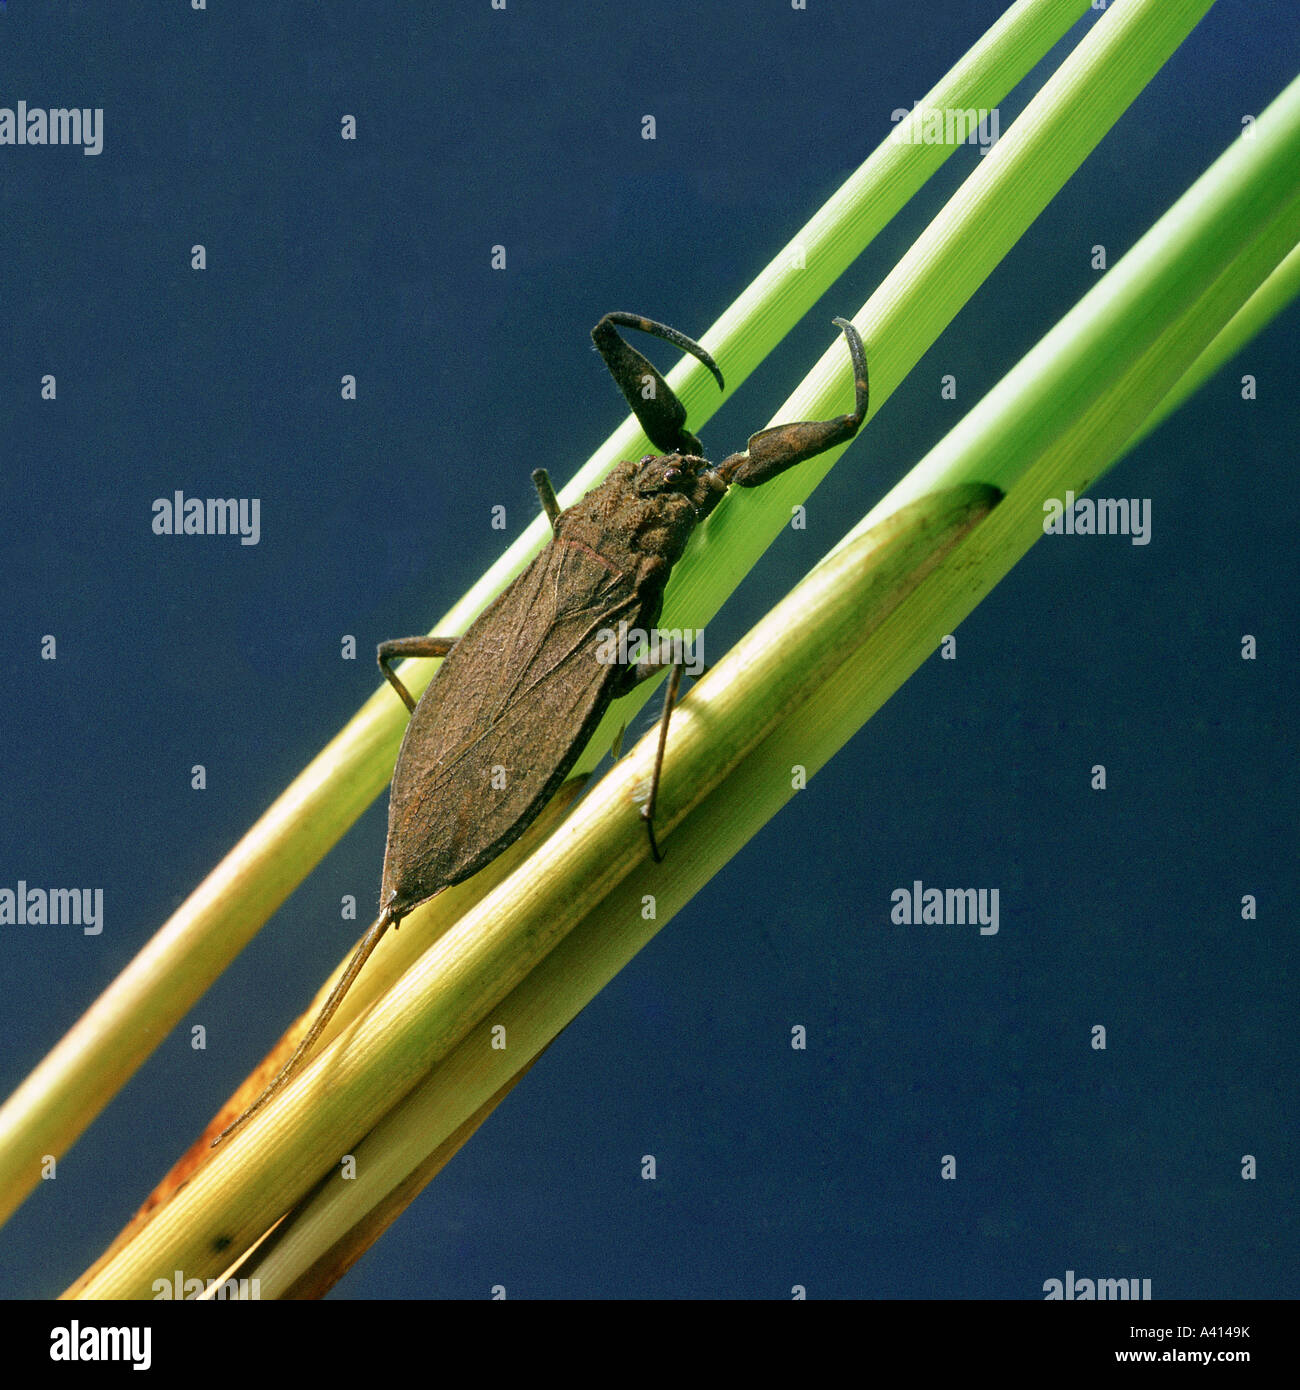 Water scorpion Nepa cinerea resting on reeds underwater Stock Photo